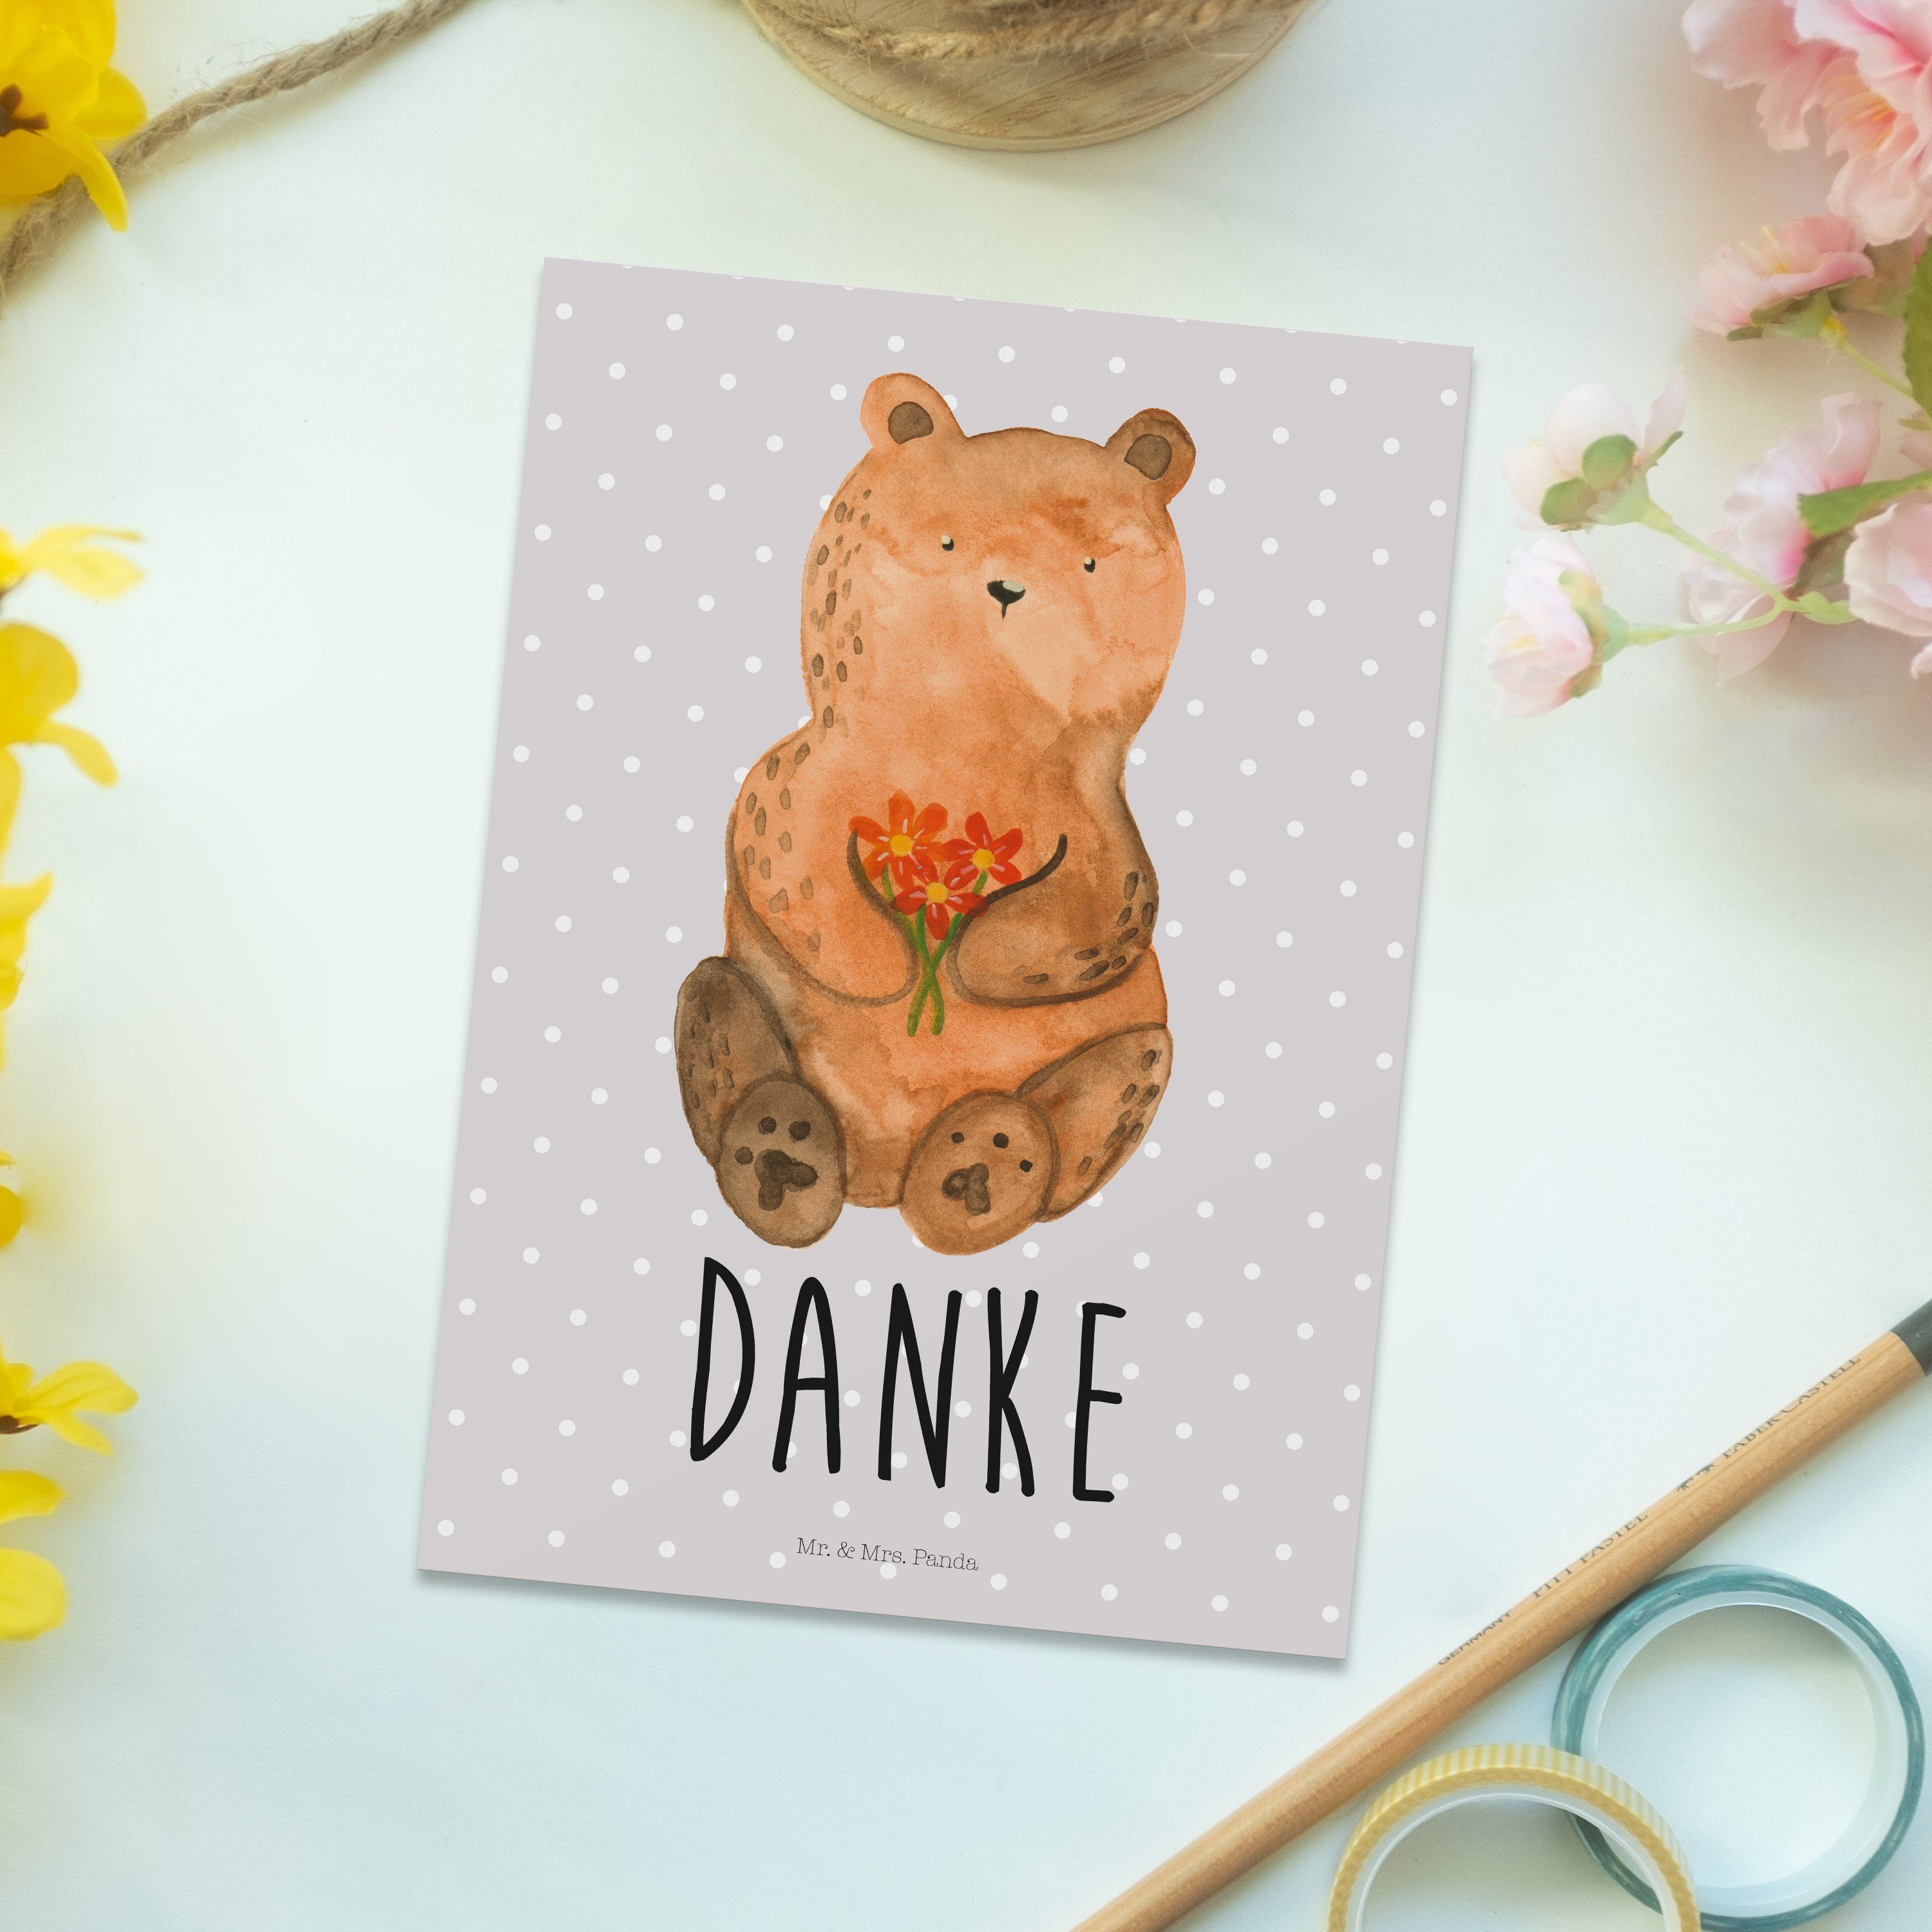 Mr. & Mrs. Panda Teddybär, - Pastell Postkarte Dankeschön, Geschenk, Dankbär - Grau Einladung, D